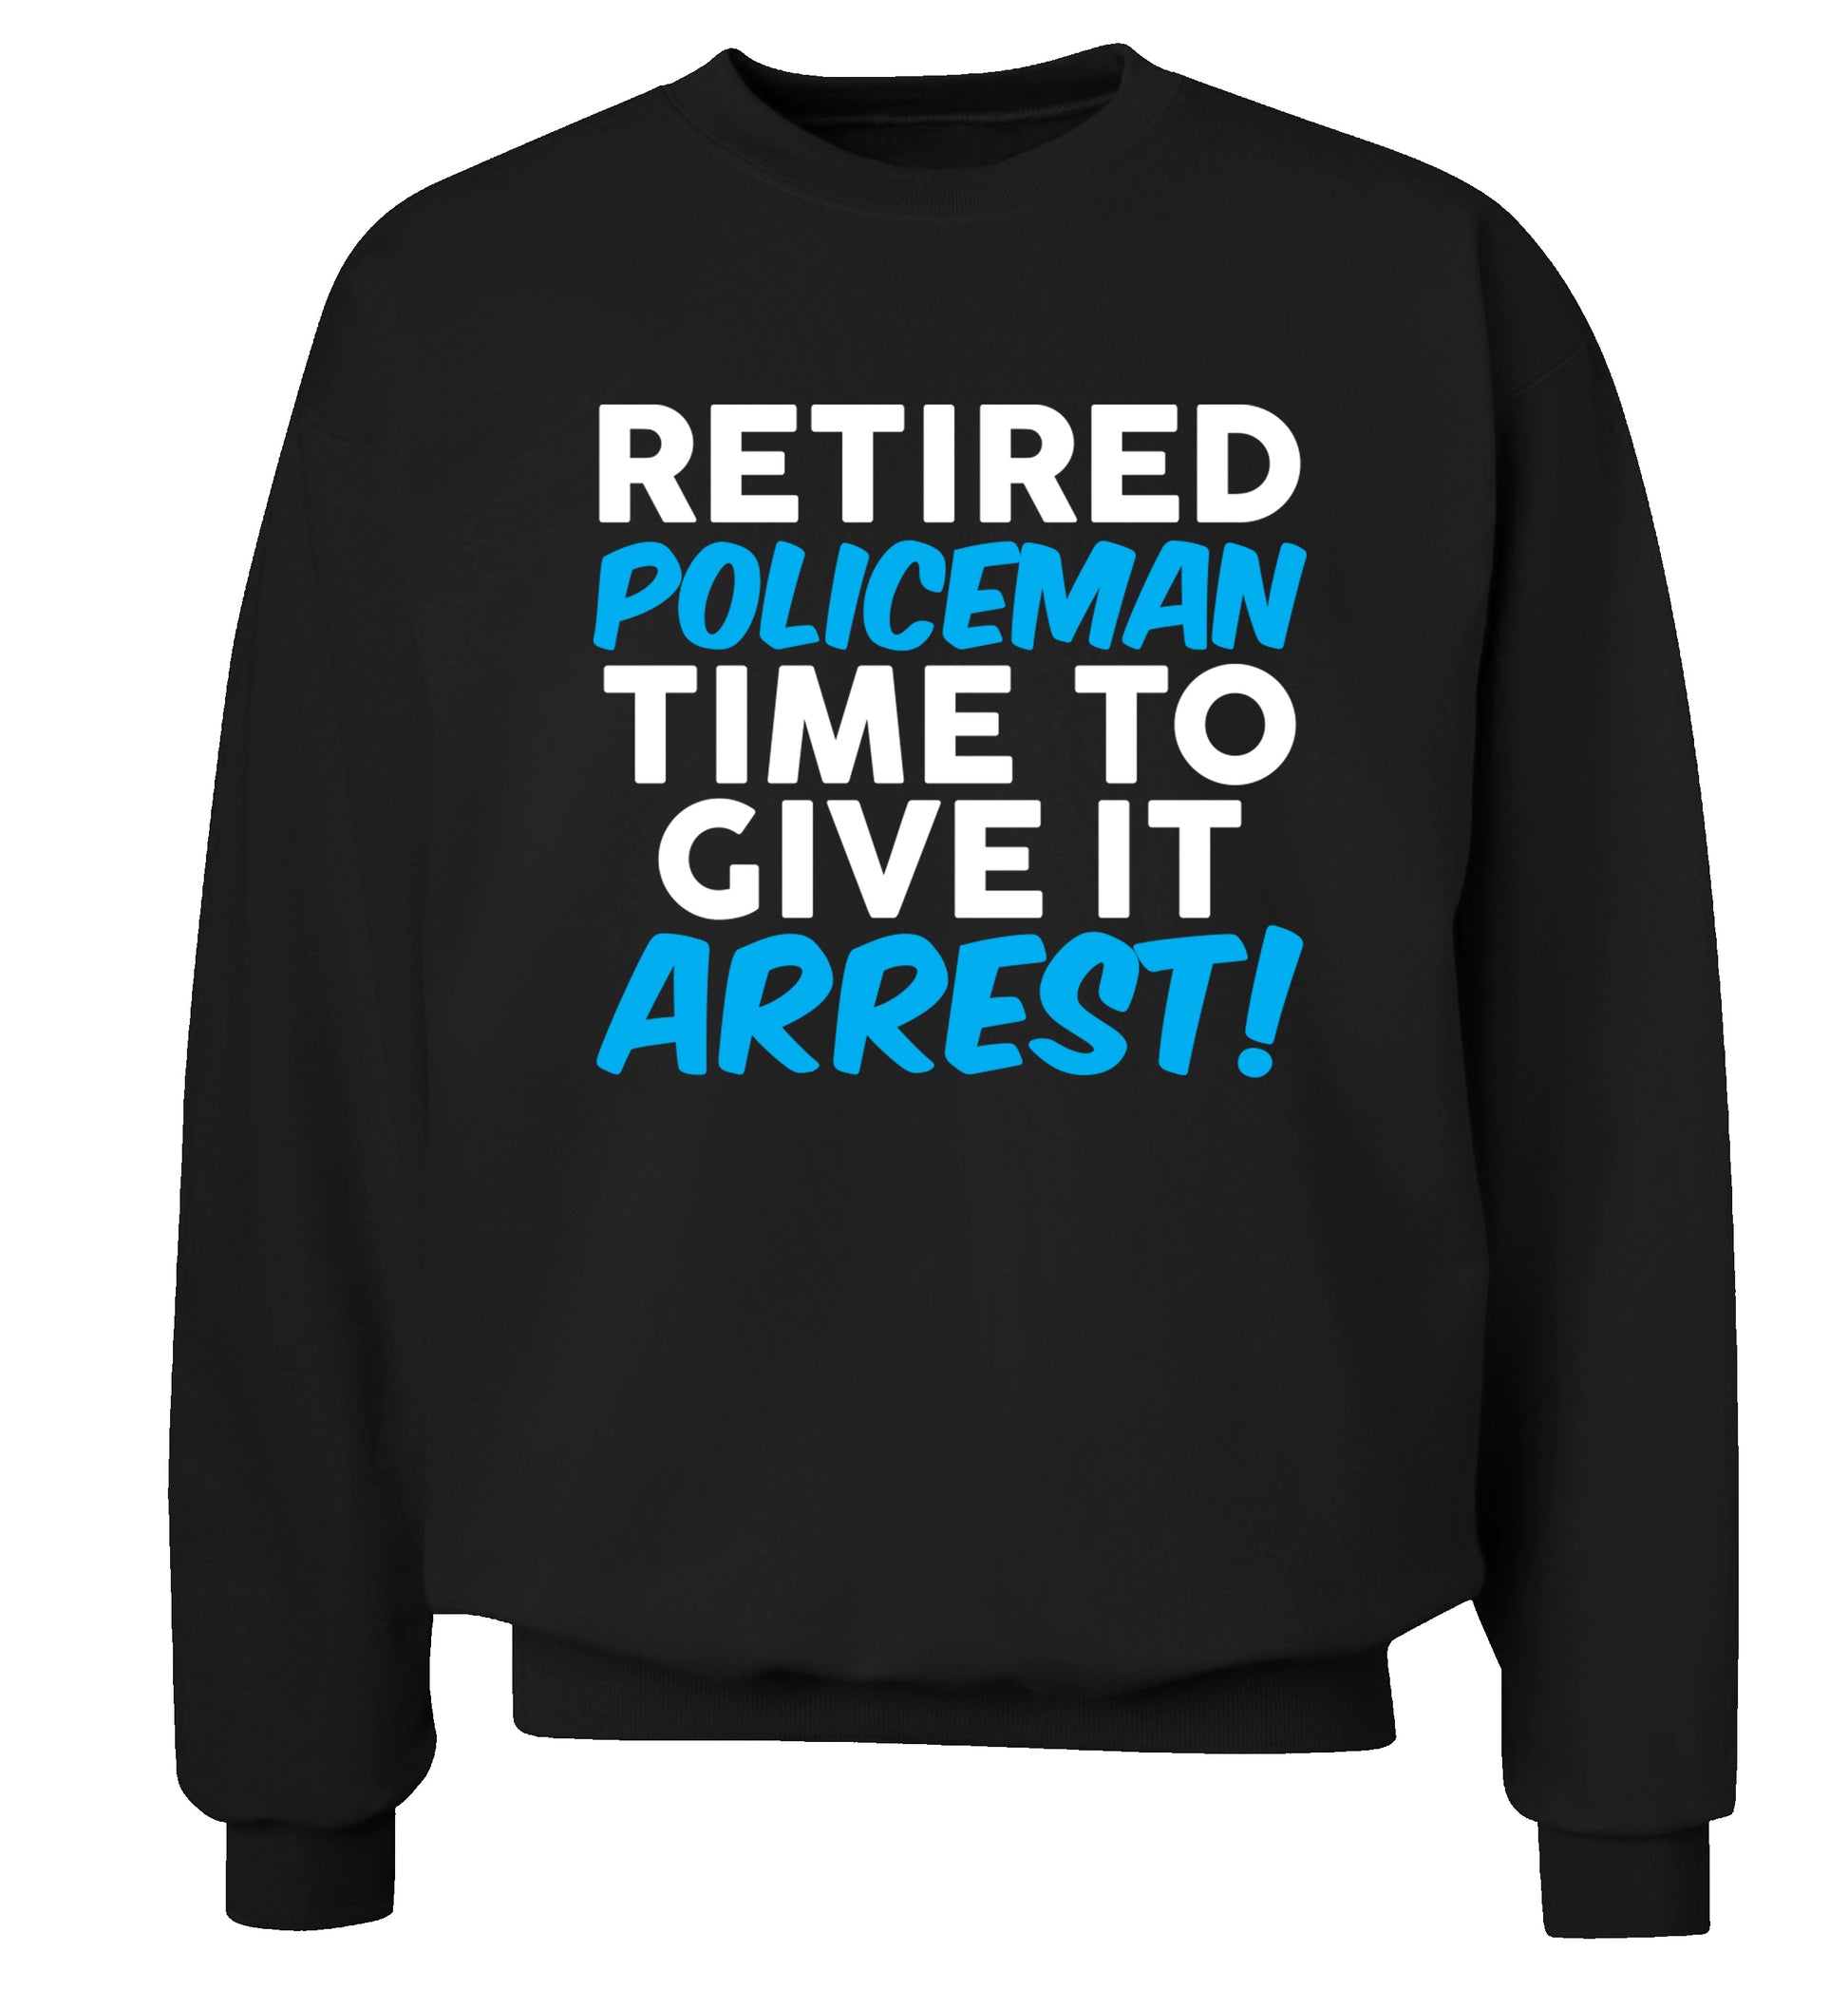 Retired policeman give it arresst! Adult's unisex black Sweater 2XL